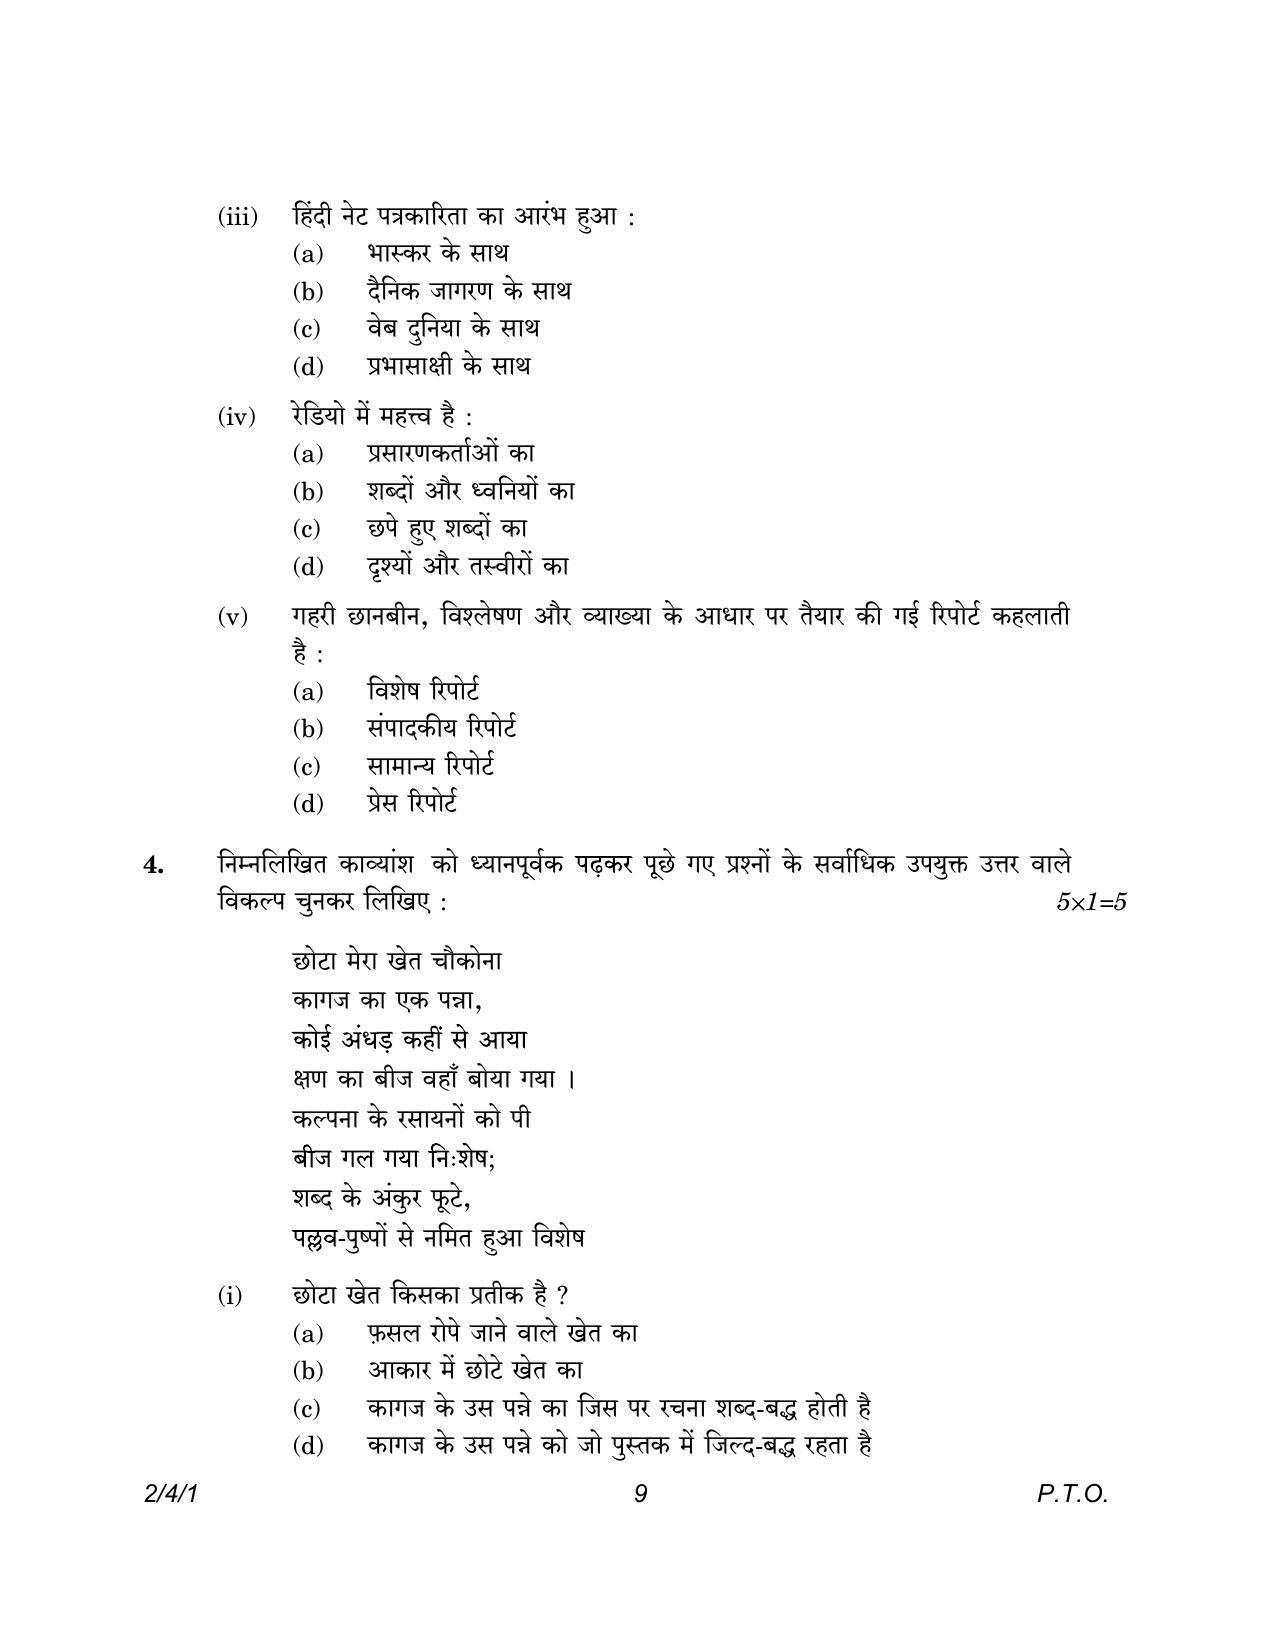 CBSE Class 12 2-4-1 Hindi Core version 2023 Question Paper - Page 9